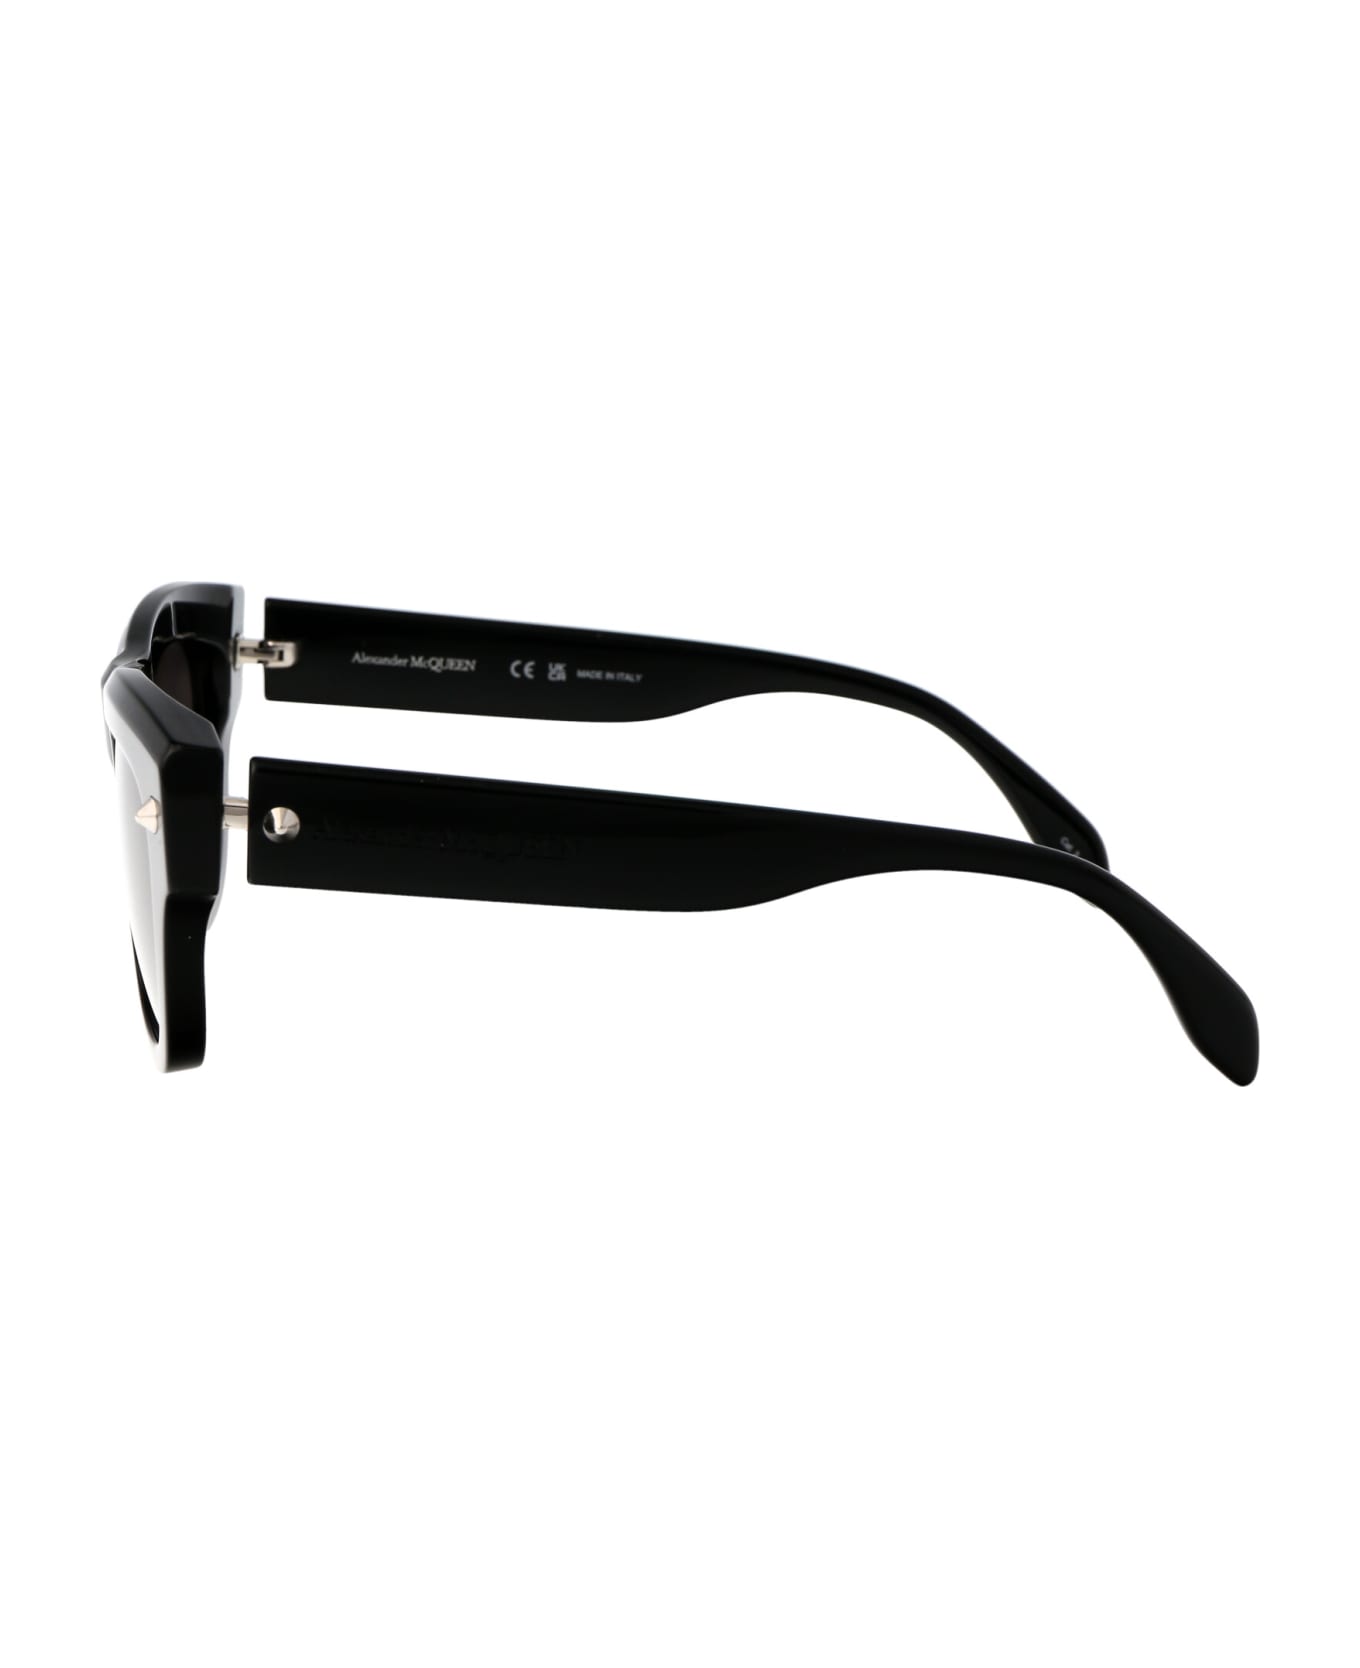 Alexander McQueen Eyewear Am0425s Sunglasses - 001 BLACK BLACK GREY